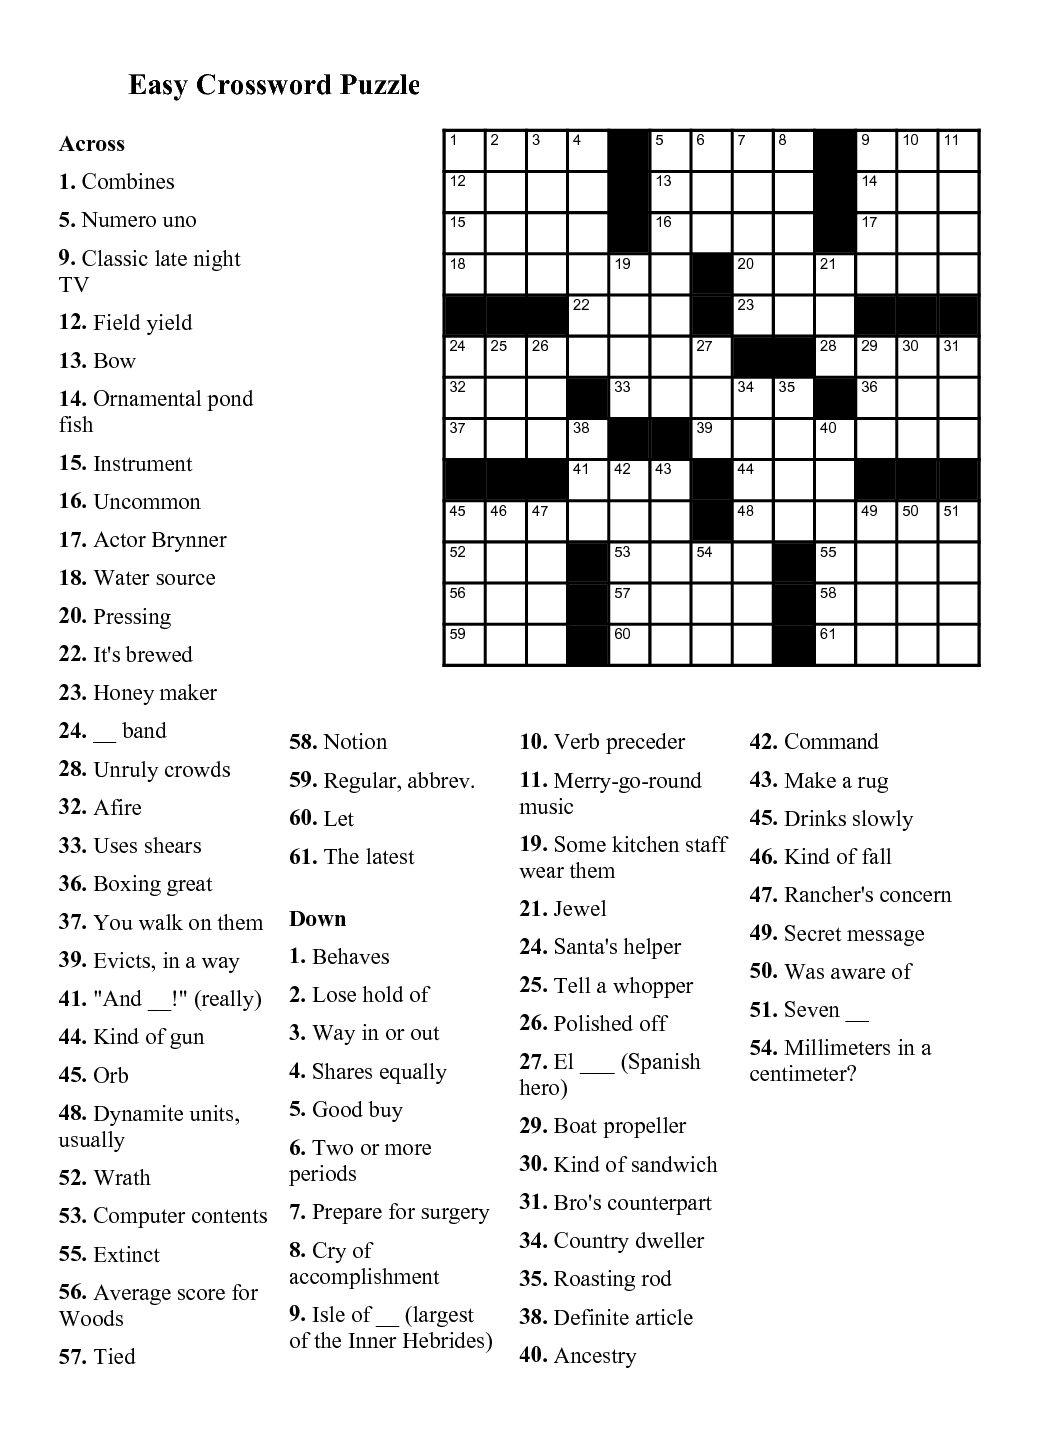 Easy Crossword Puzzles Printables Printable Crossword Puzzles